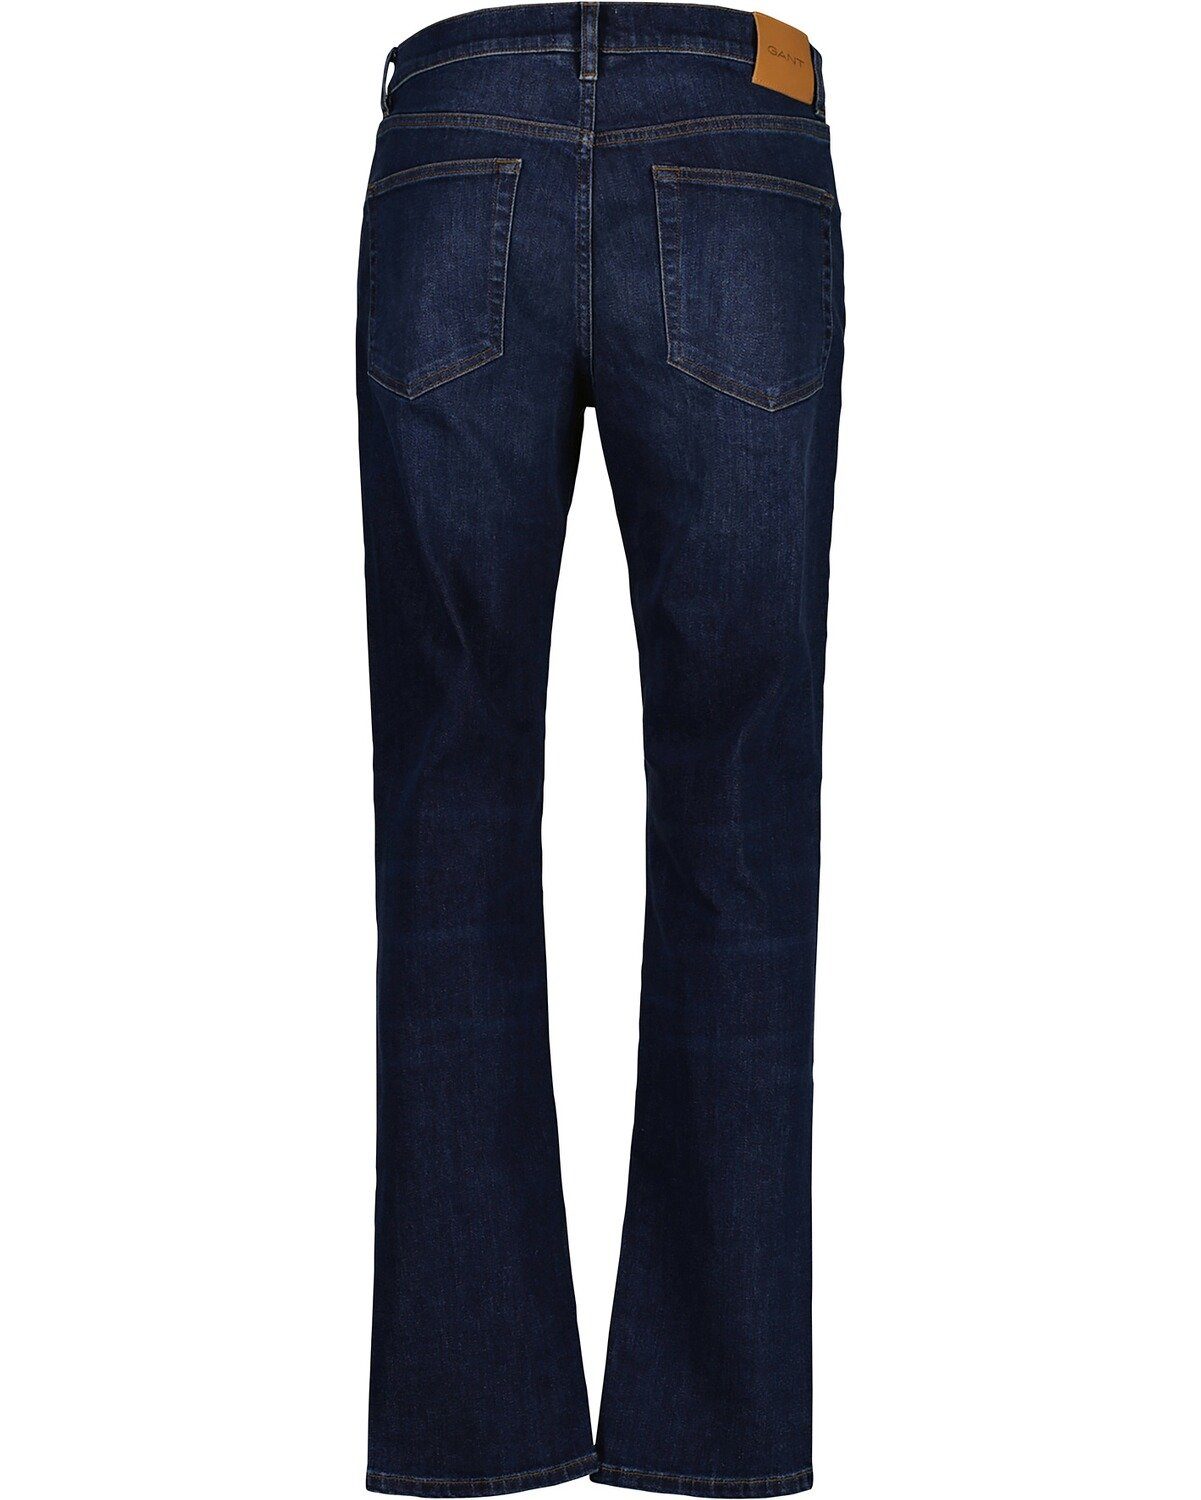 Worn Fit In Gant Slim Blue Dark 5-Pocket-Jeans Jeans